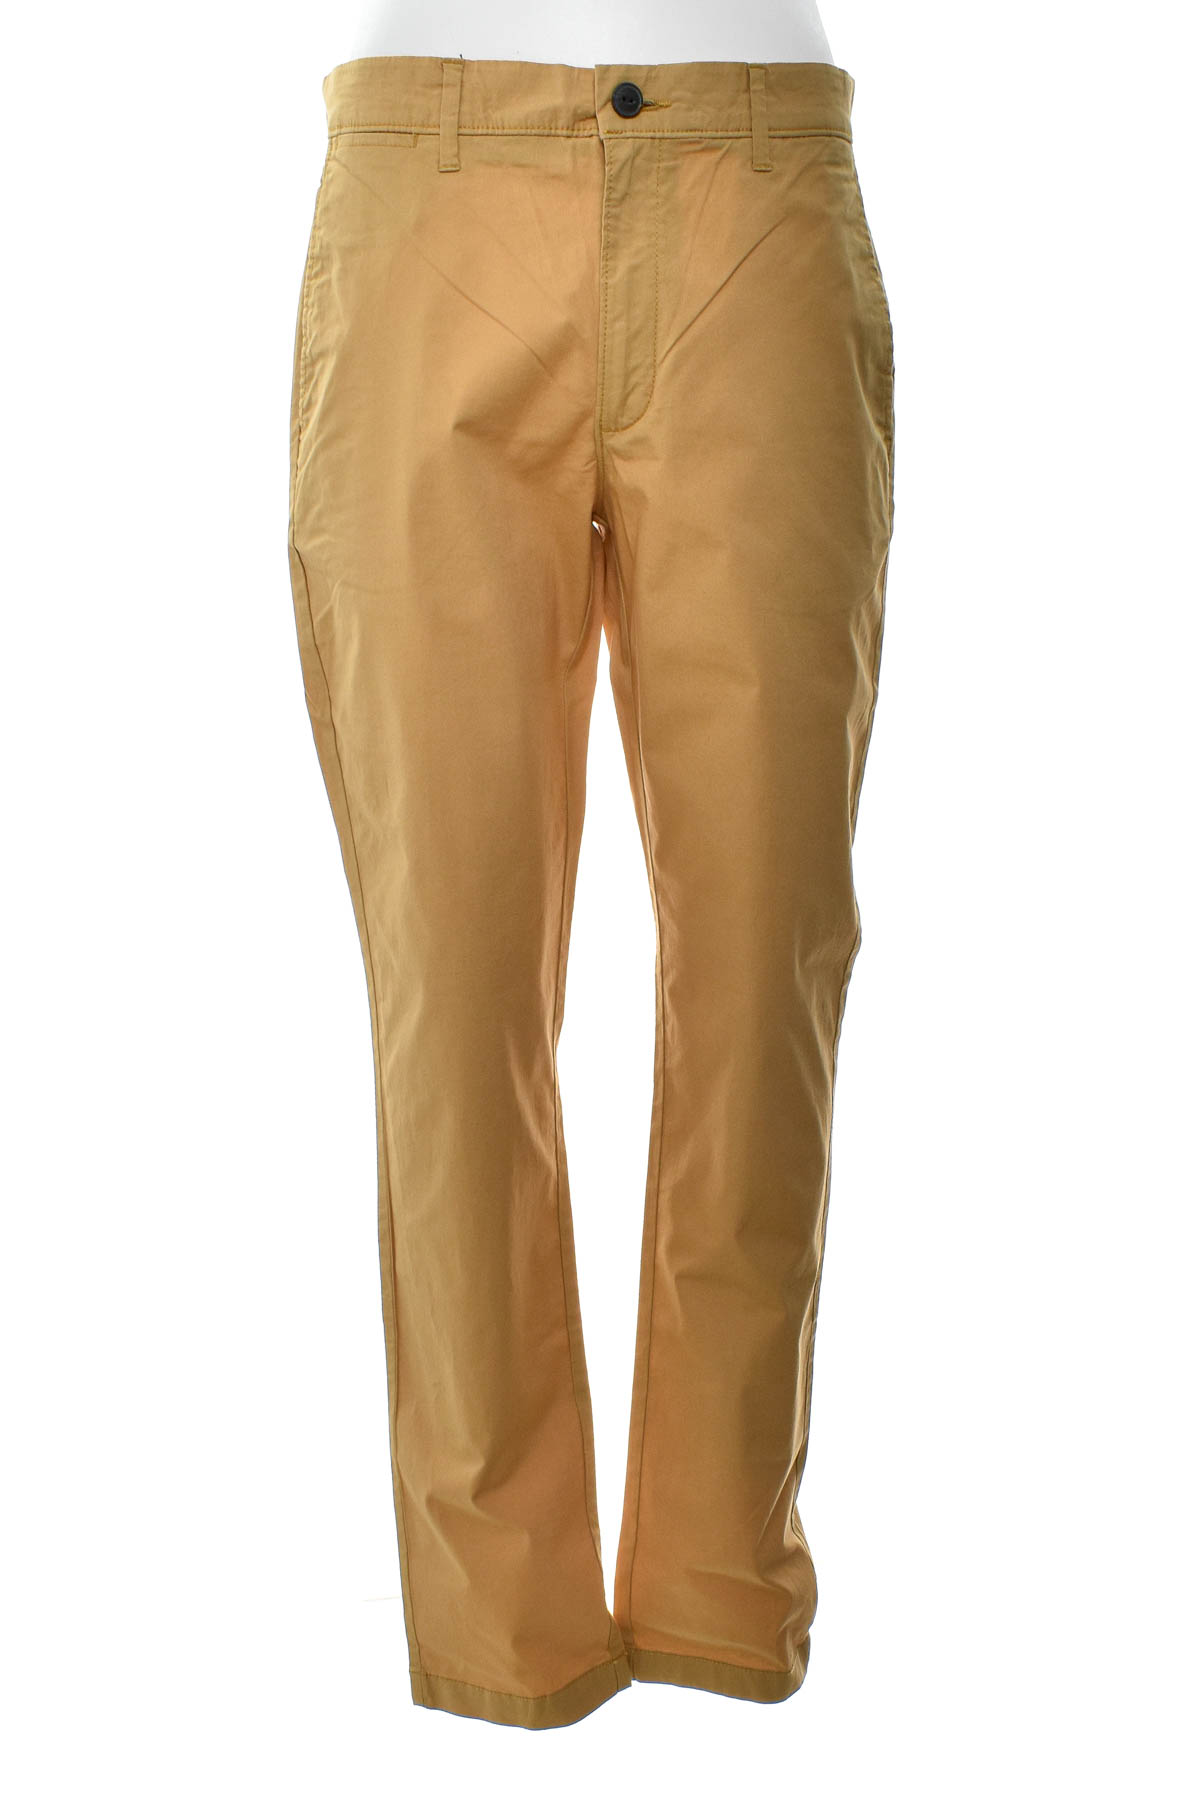 Men's trousers - Amazon essentials - 0